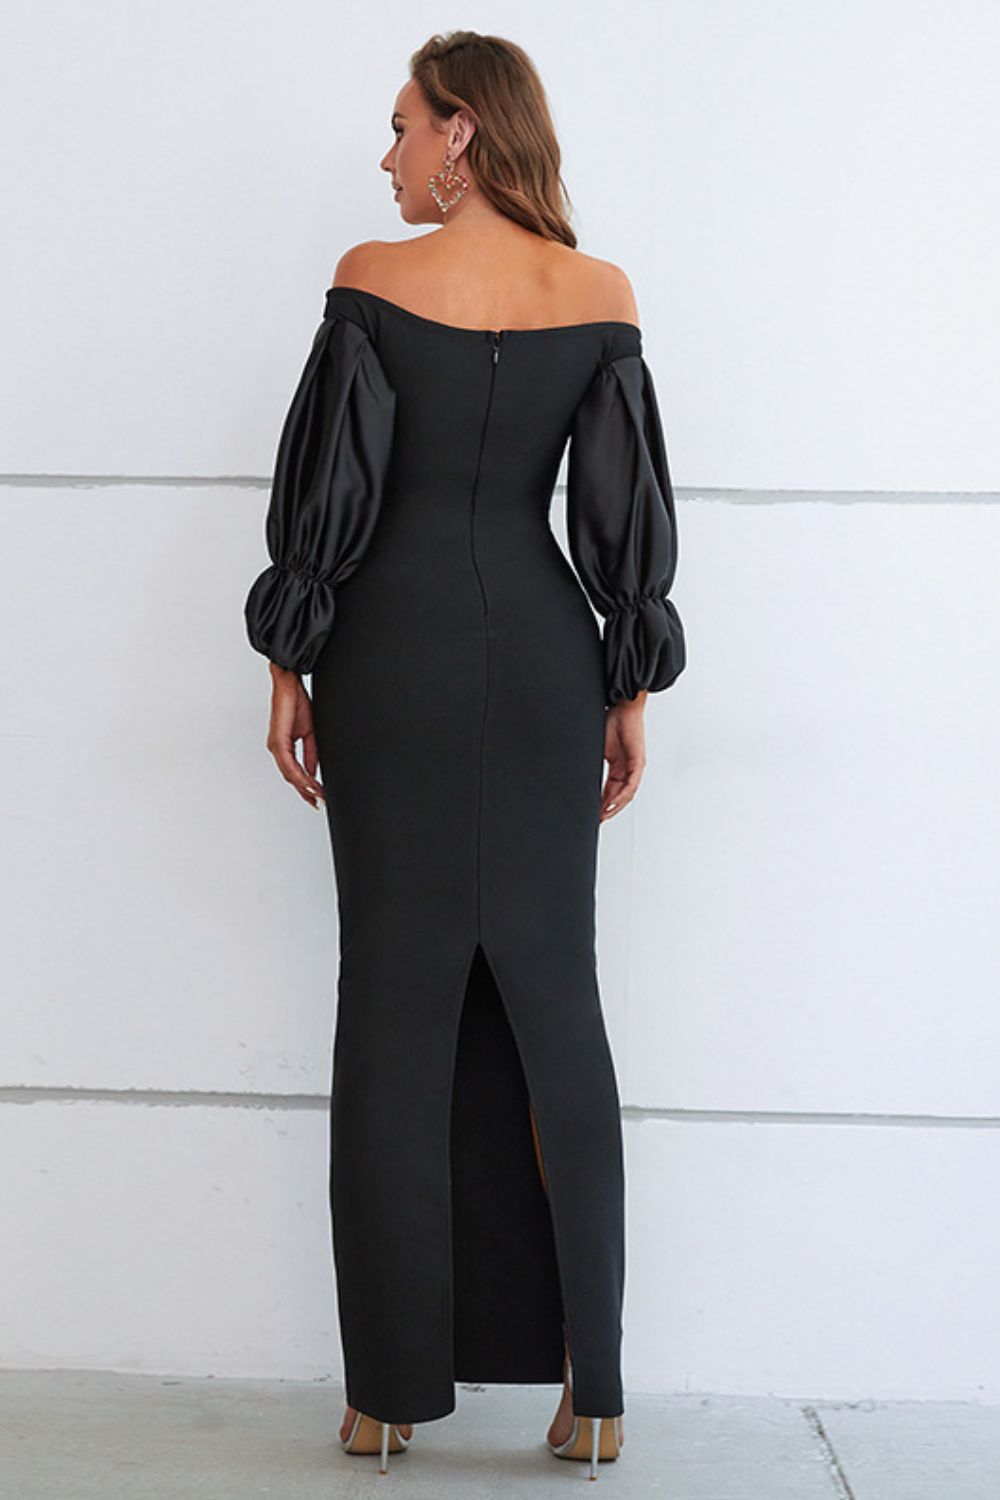 Billow Talk Knit Maxi Dress with Off-Shoulder Bishop Sleeves in Solid Black